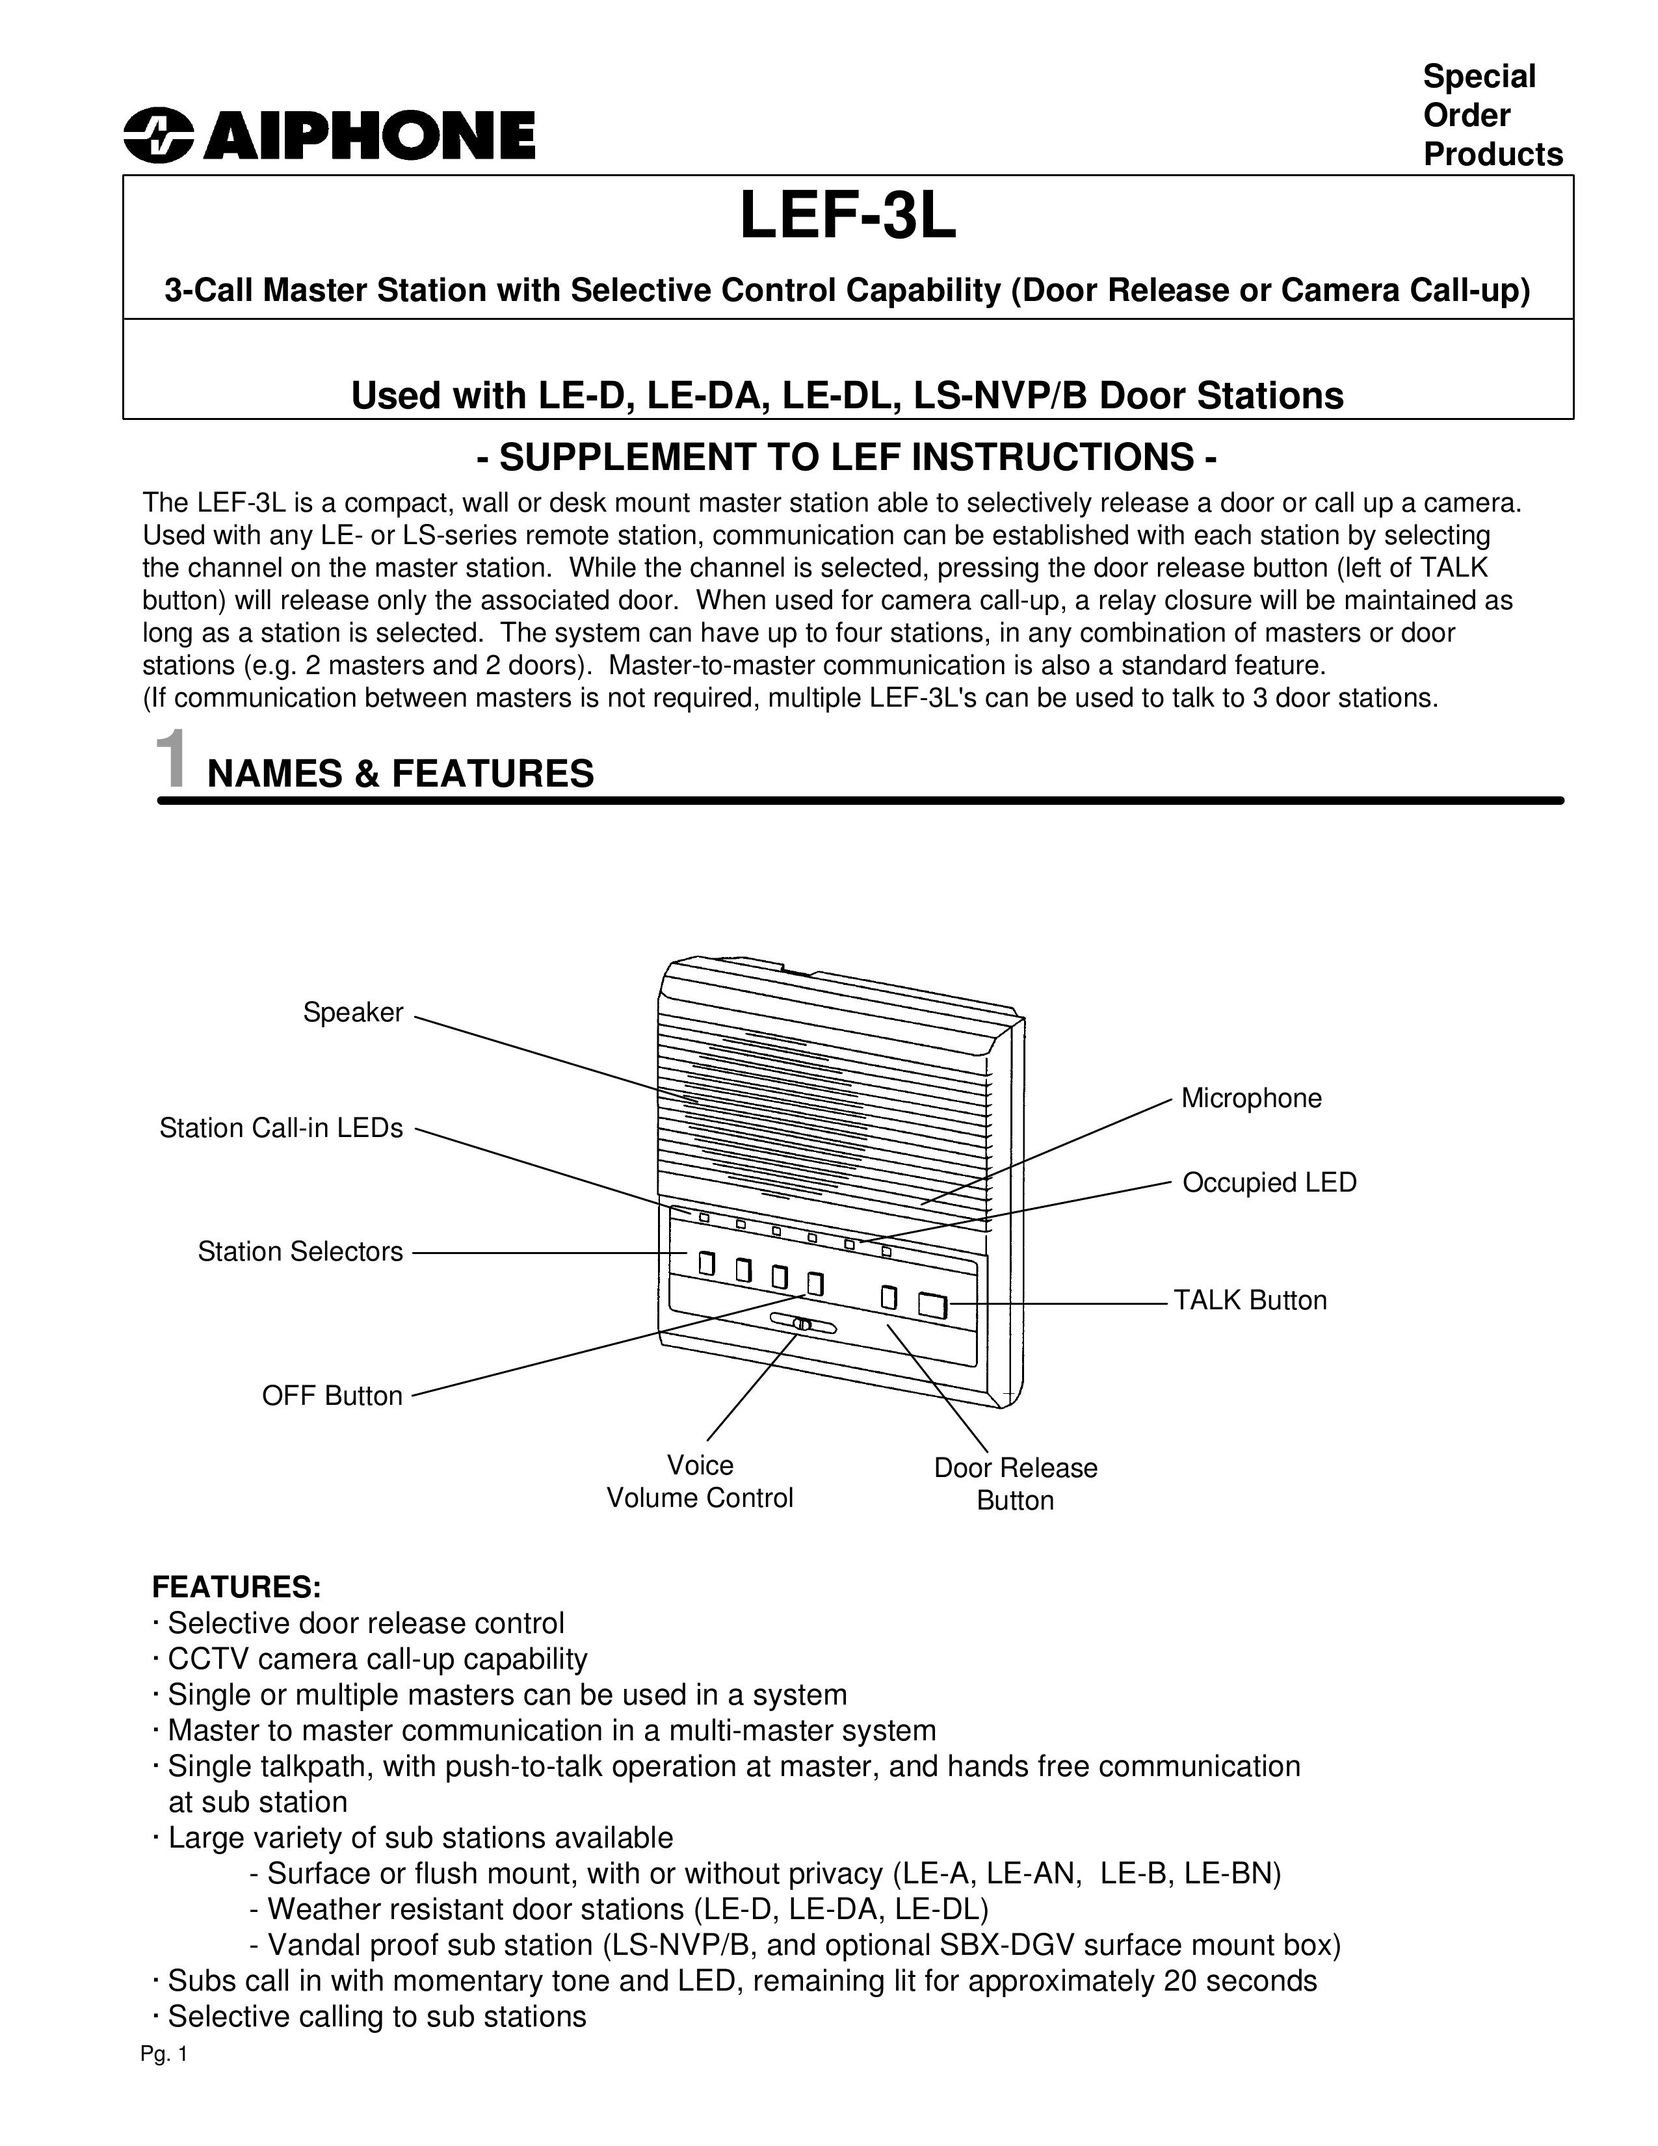 Altec Lansing LEF-3L Intercom System User Manual